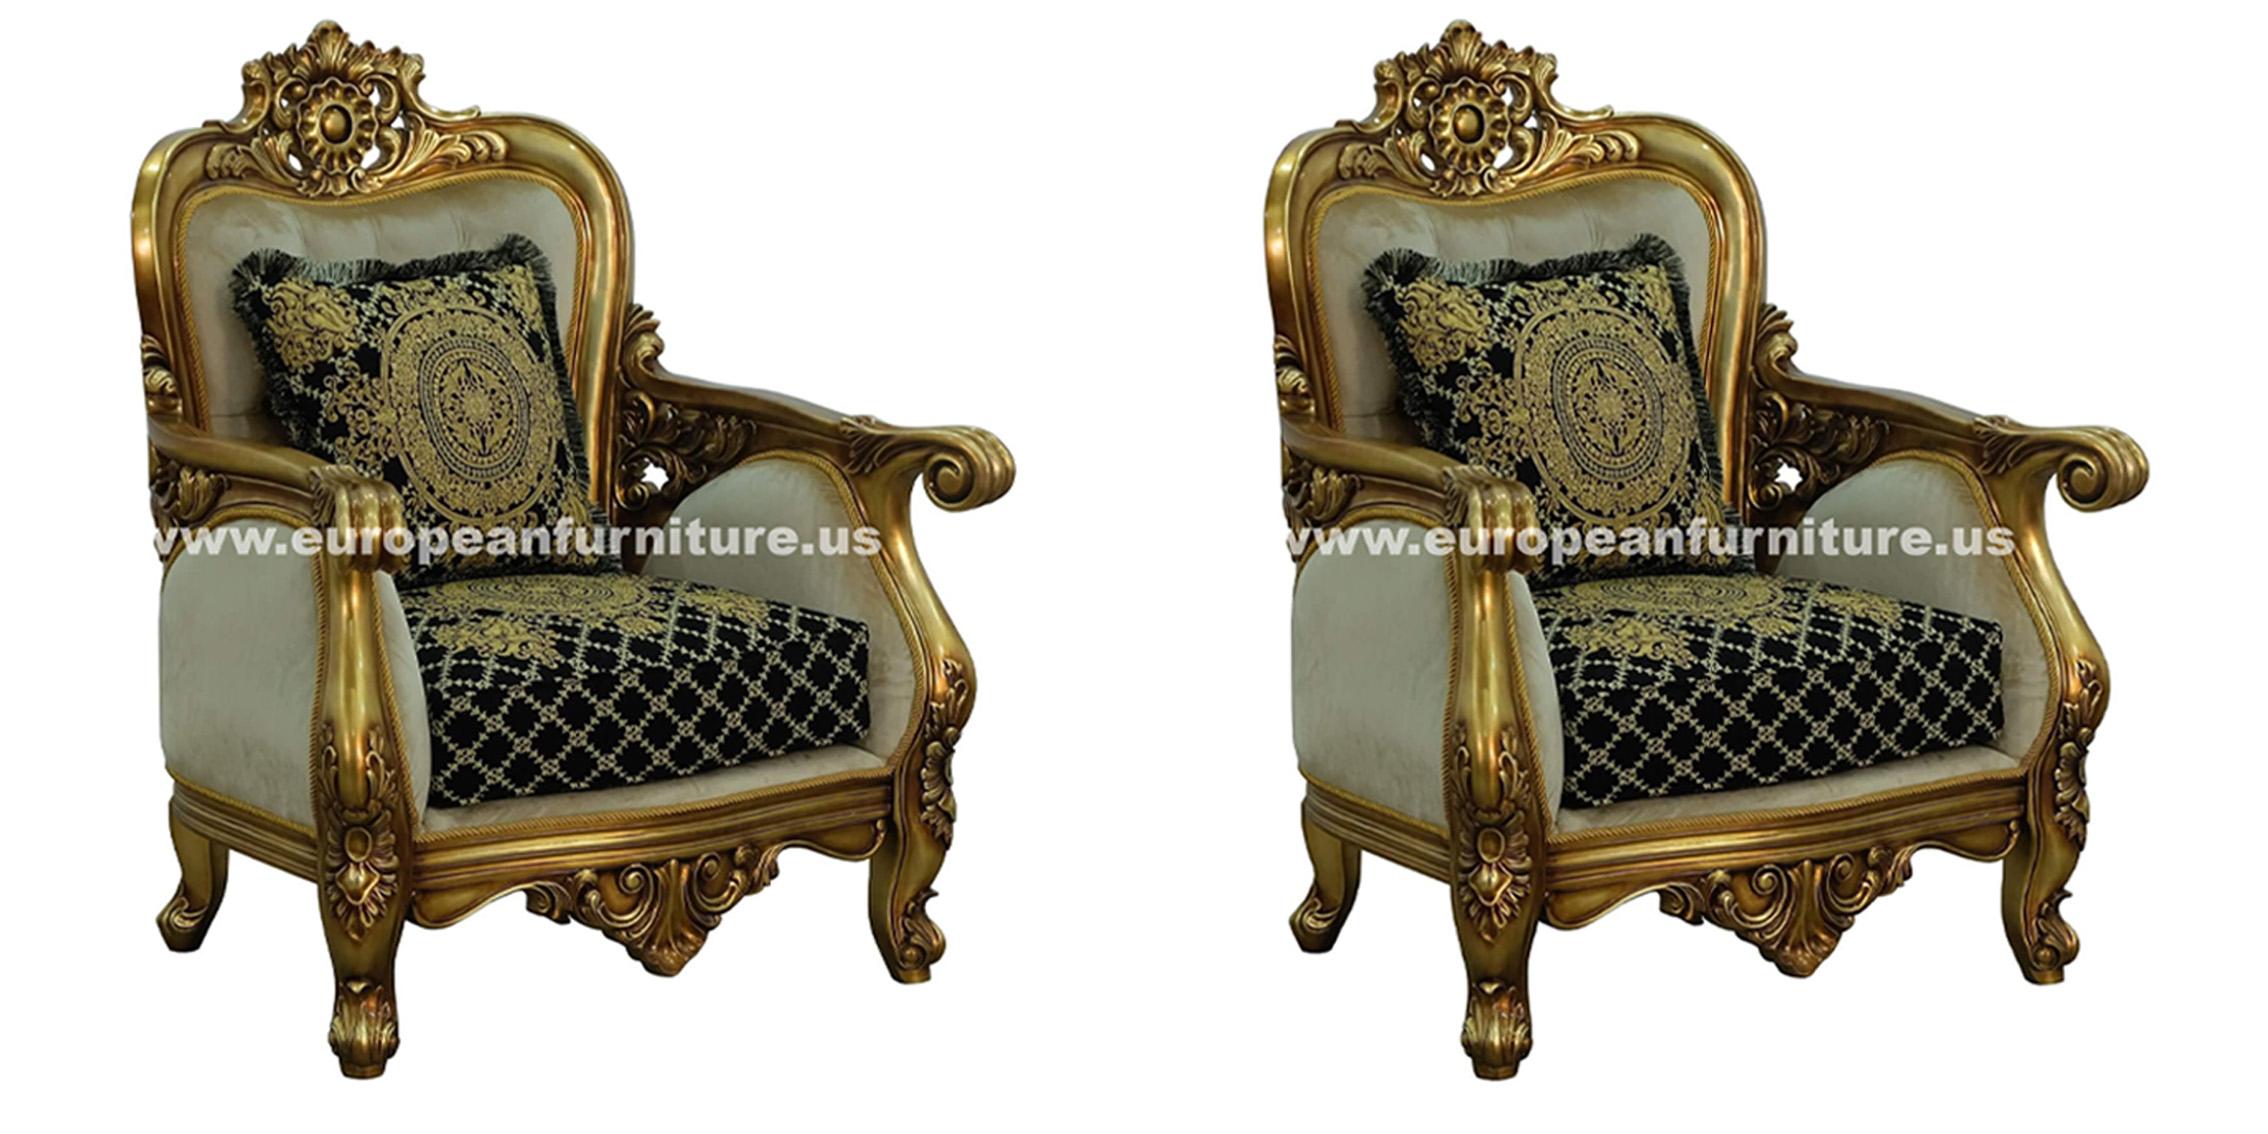 Classic, Traditional Arm Chair Set BELLAGIO 30018-C-Set-2 in Antique, Bronze, Black Fabric